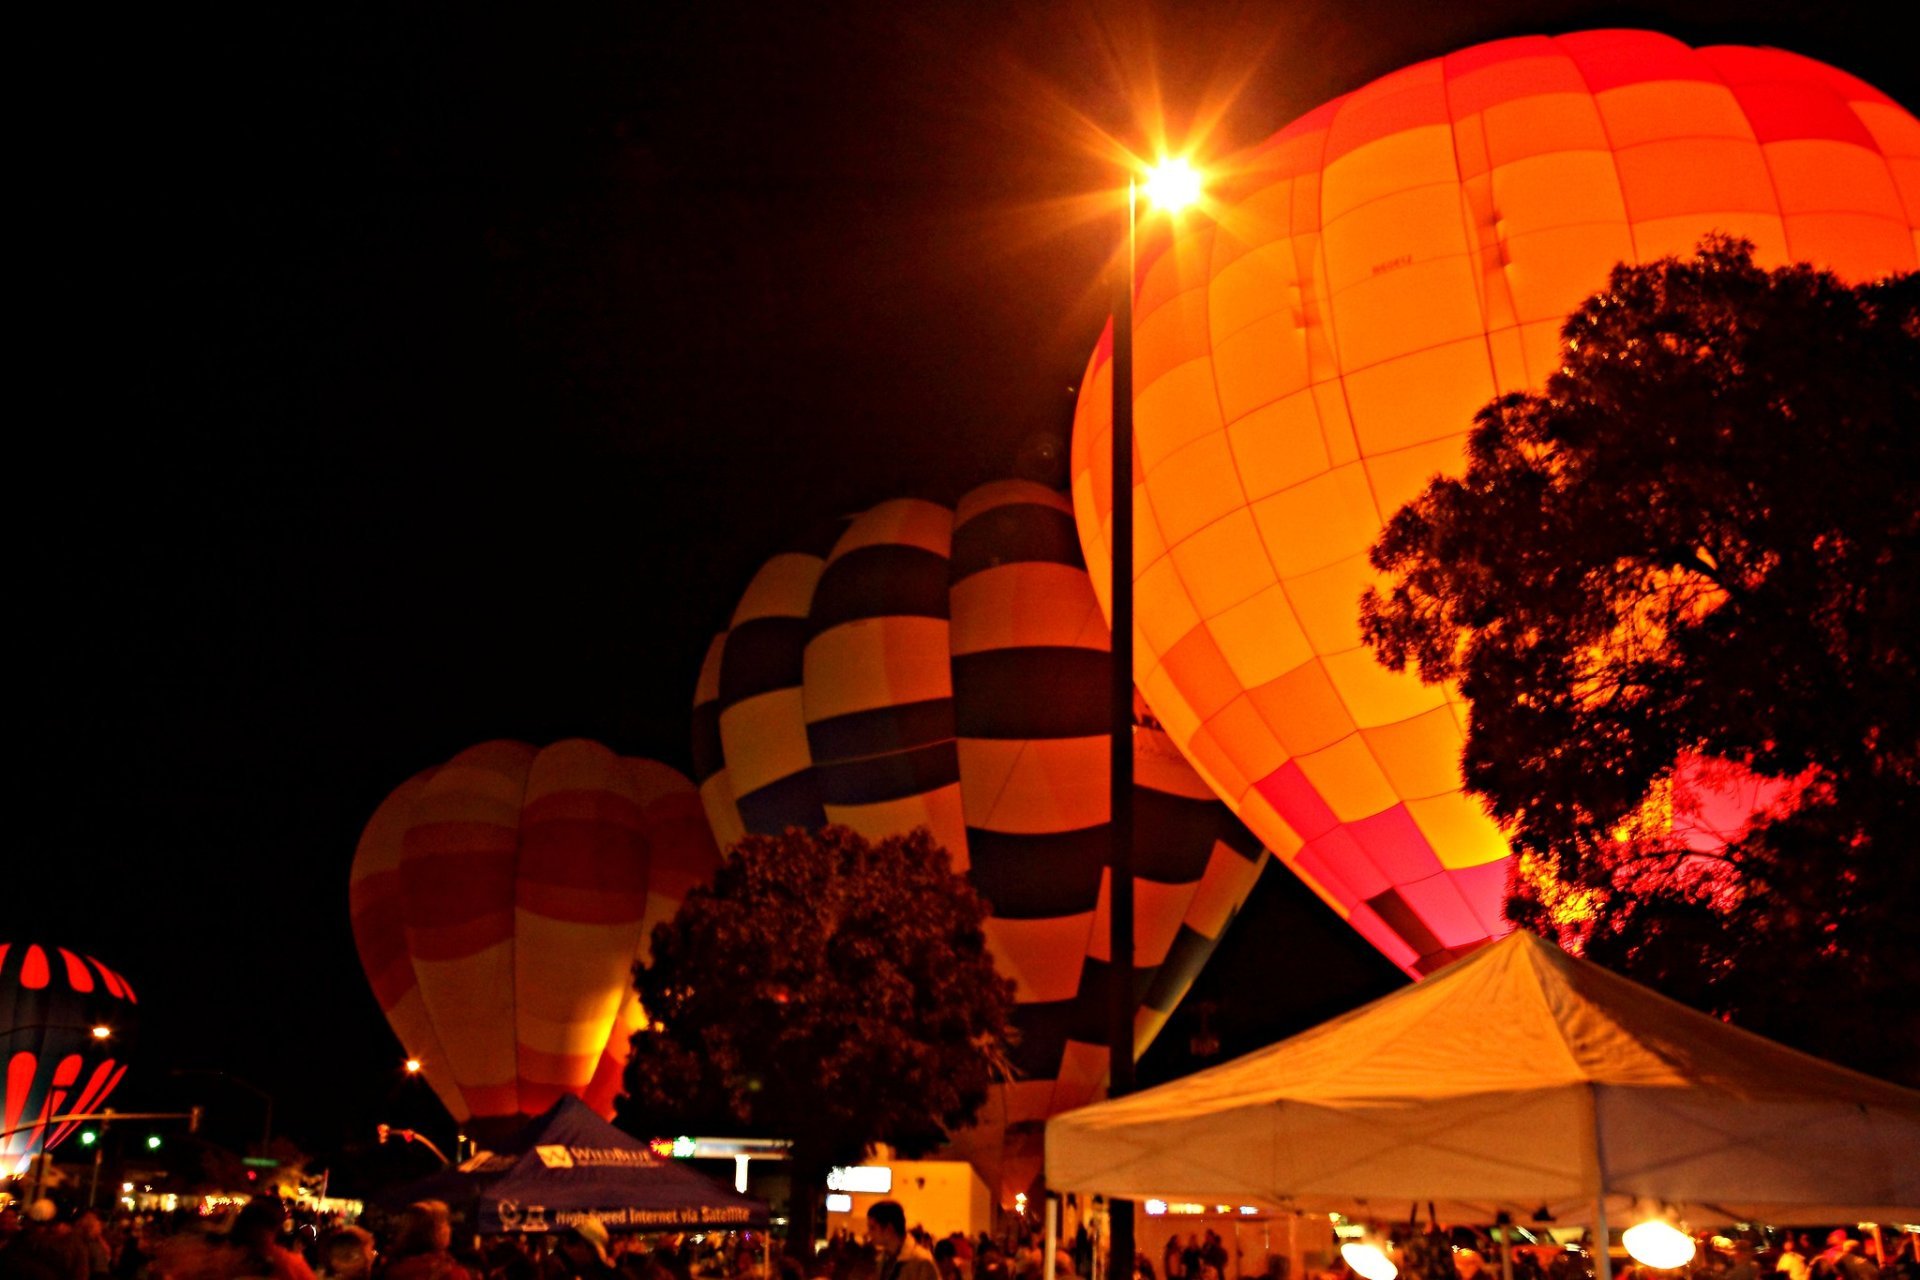 Page Lake Powell Balloon Regatta 2024 in Arizona Dates